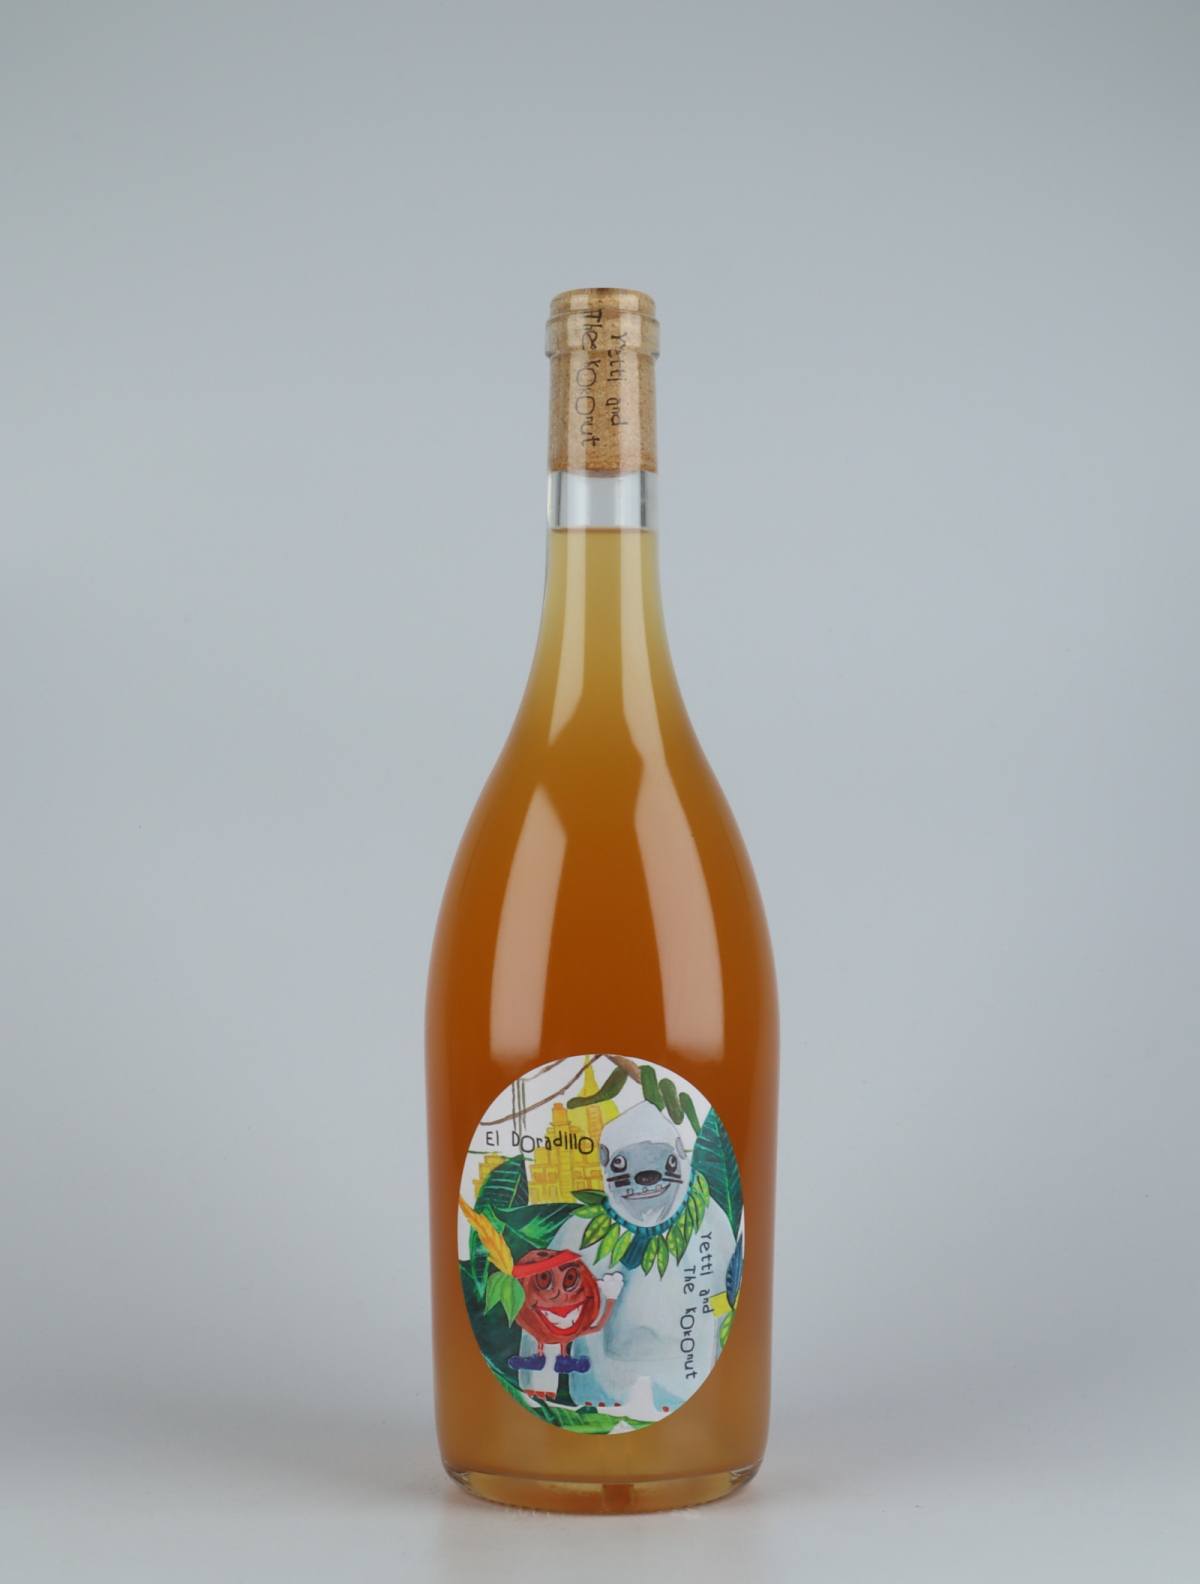 A bottle 2020 El Doradillo Orange wine from Yetti and the Kokonut, Adelaide Hills in Australia